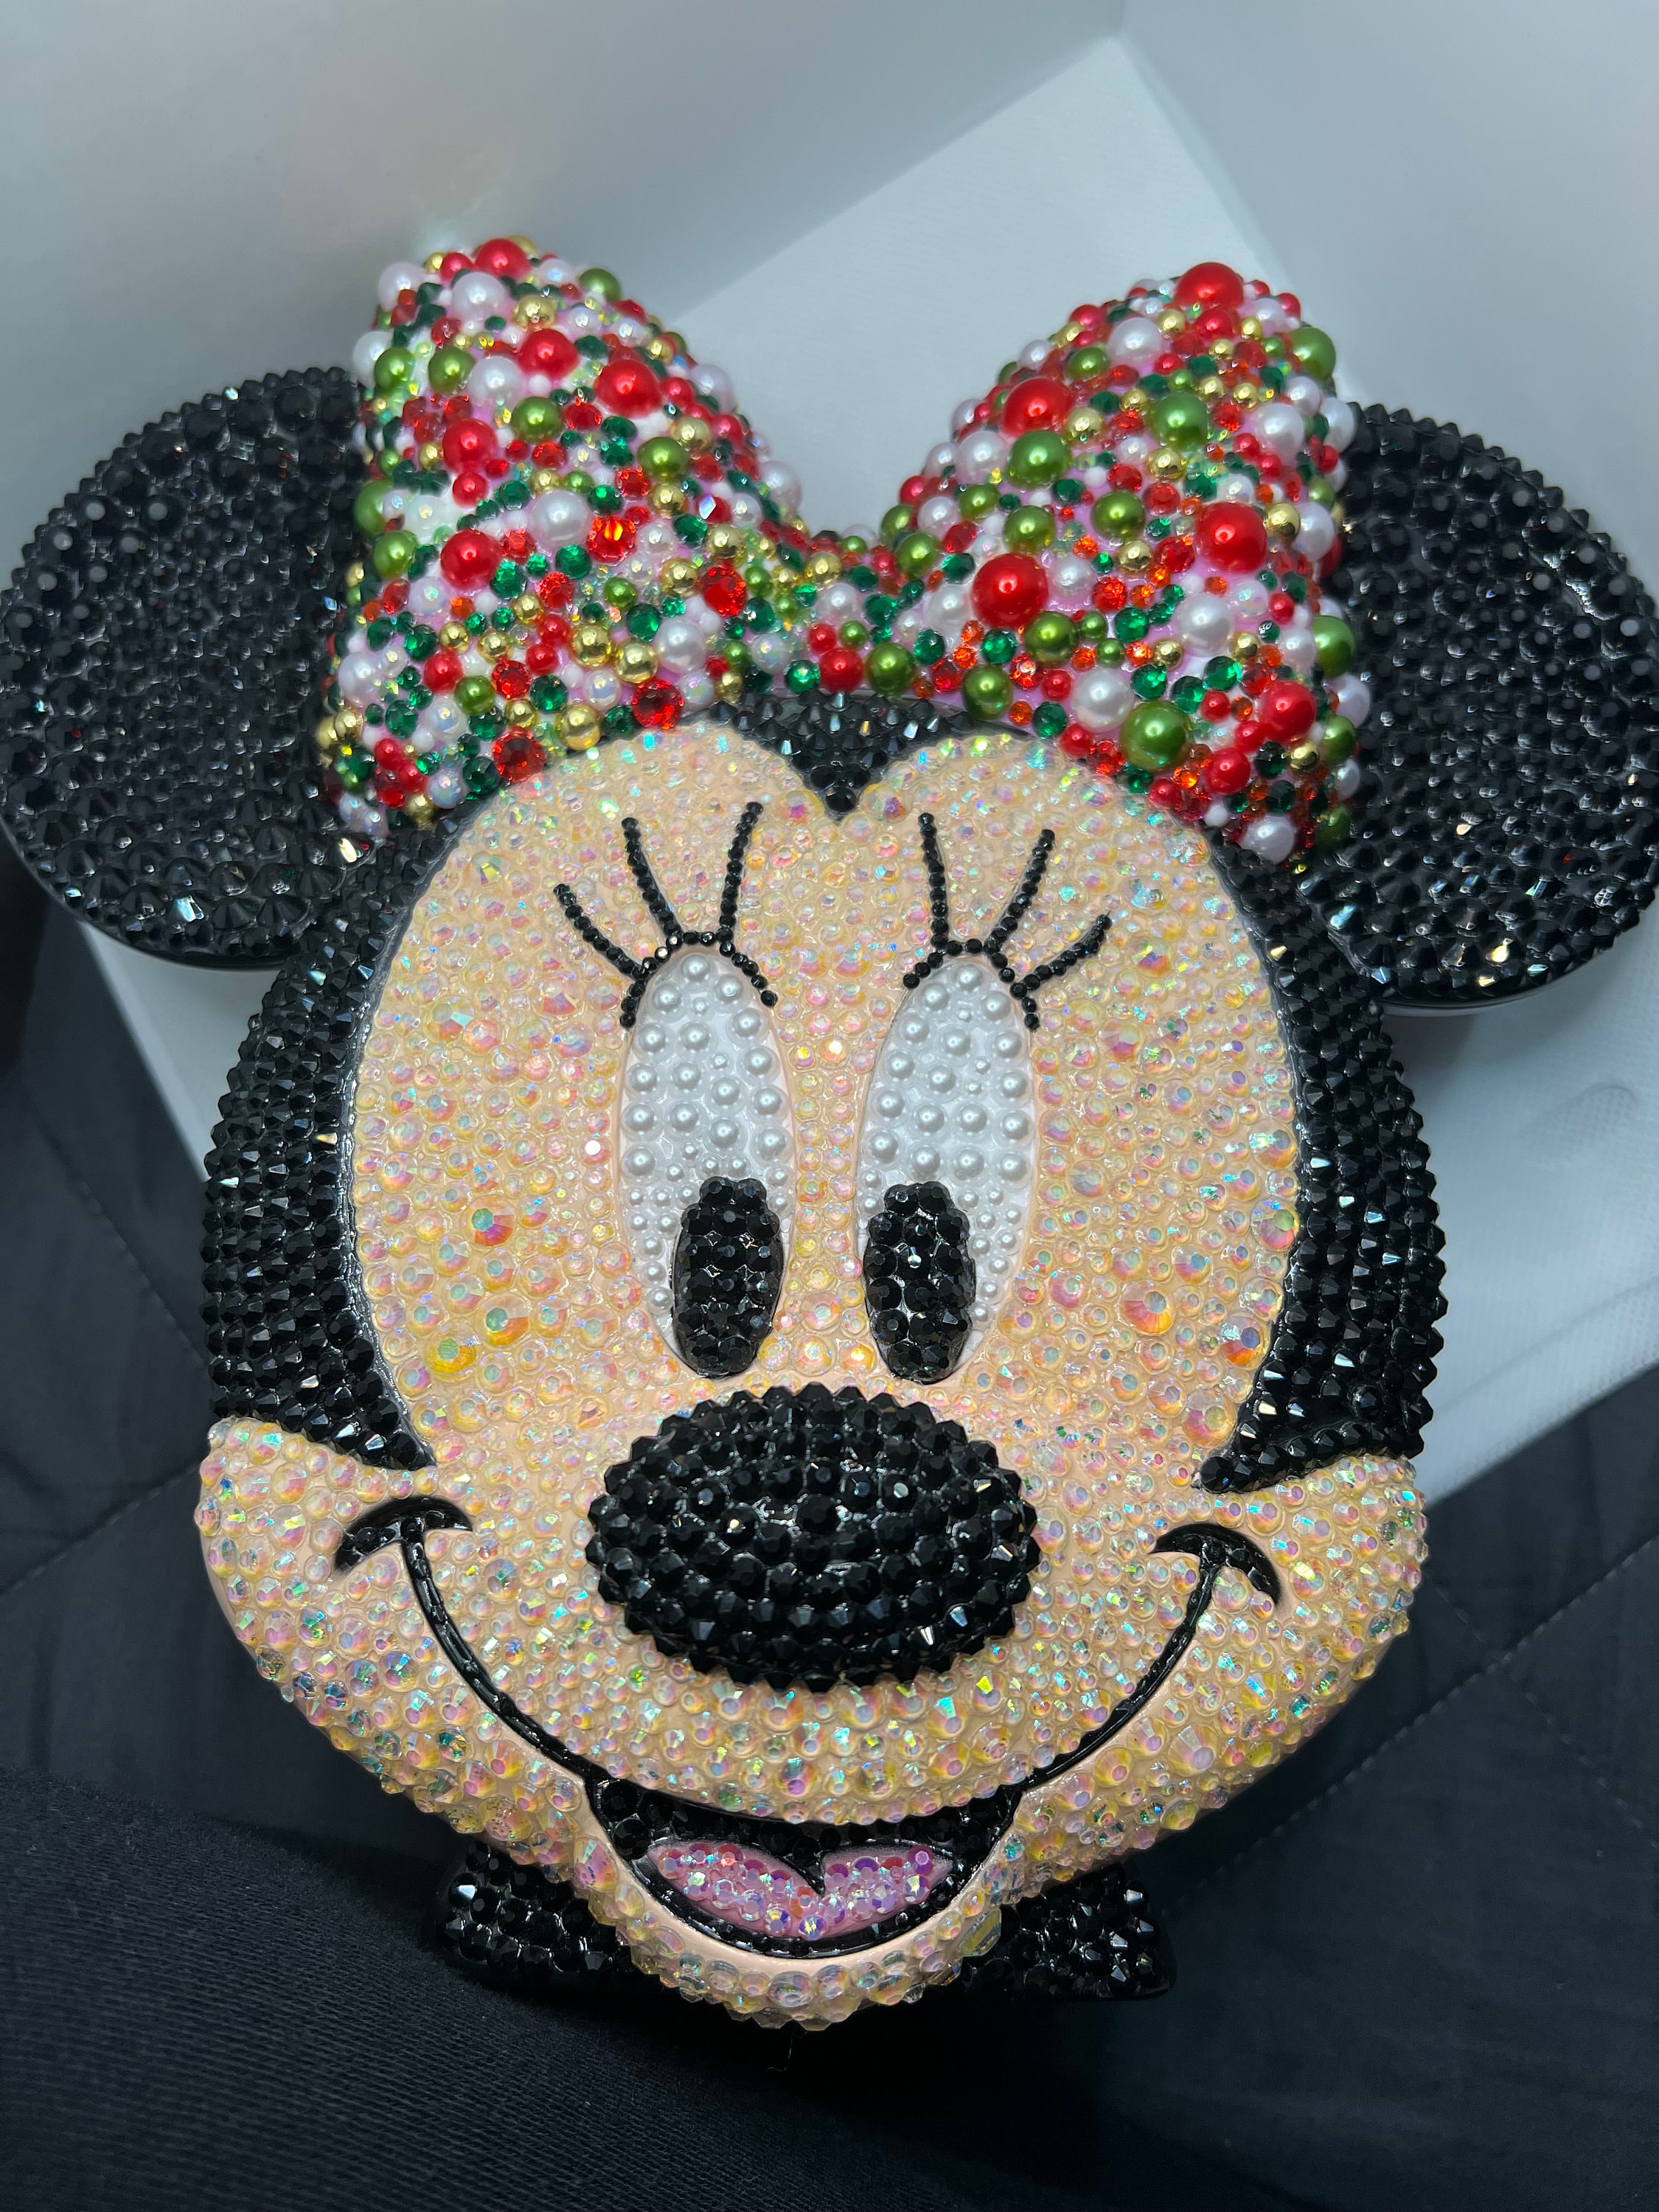 Mickey Mouse Disney Retro Fashion Handbag Women's Bag New Splicing Color  Collision Print Shoulder Cross-body Bucket Bags